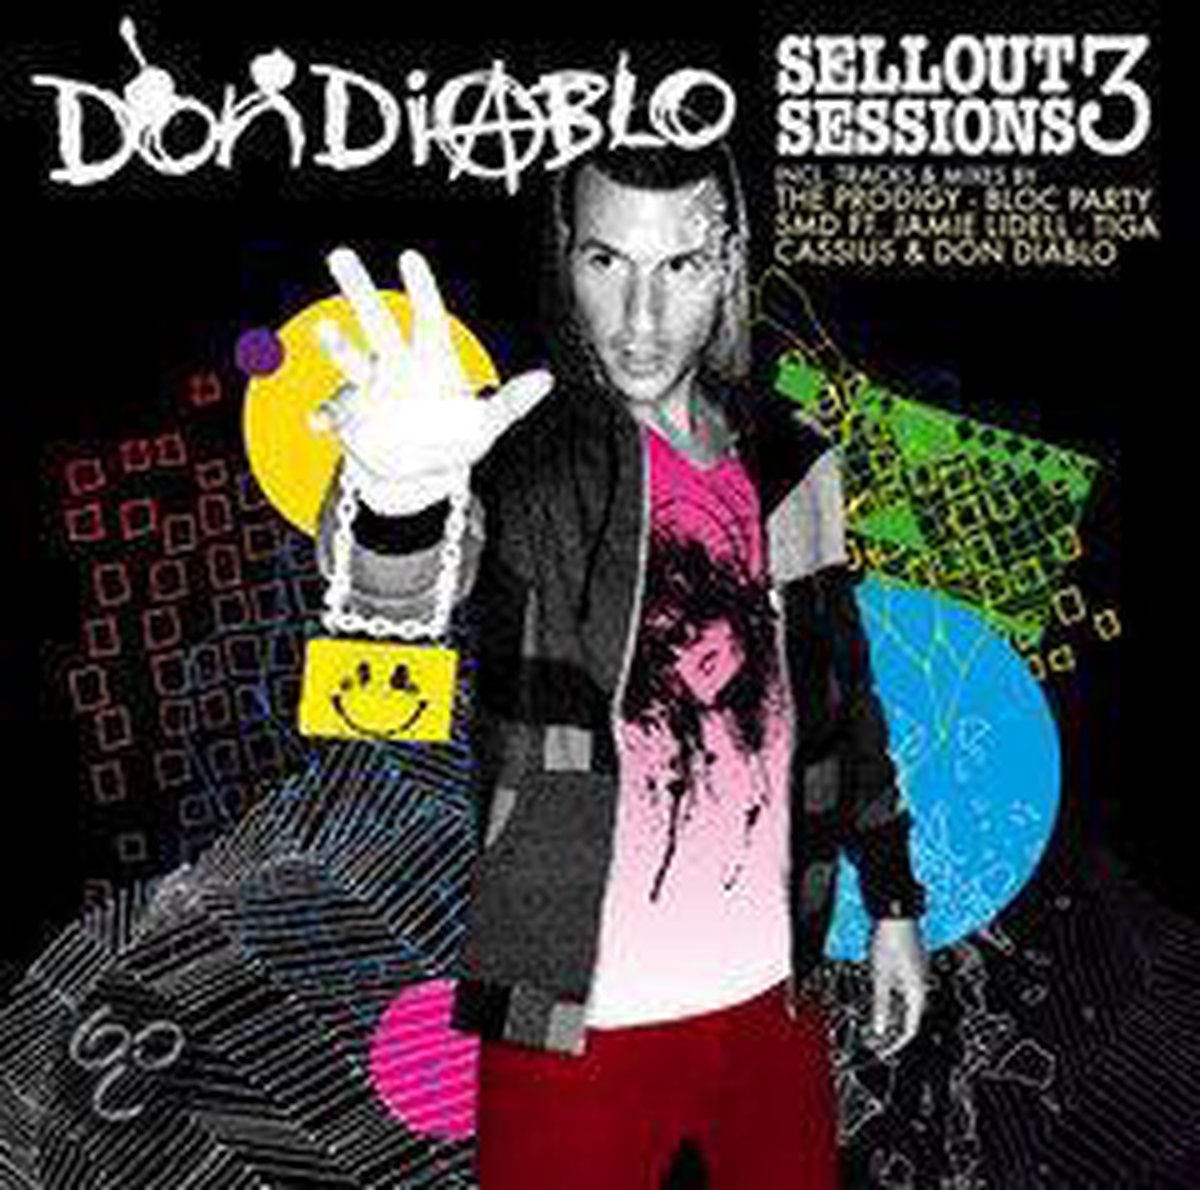 Sellout Sessions 03 - Don Diablo